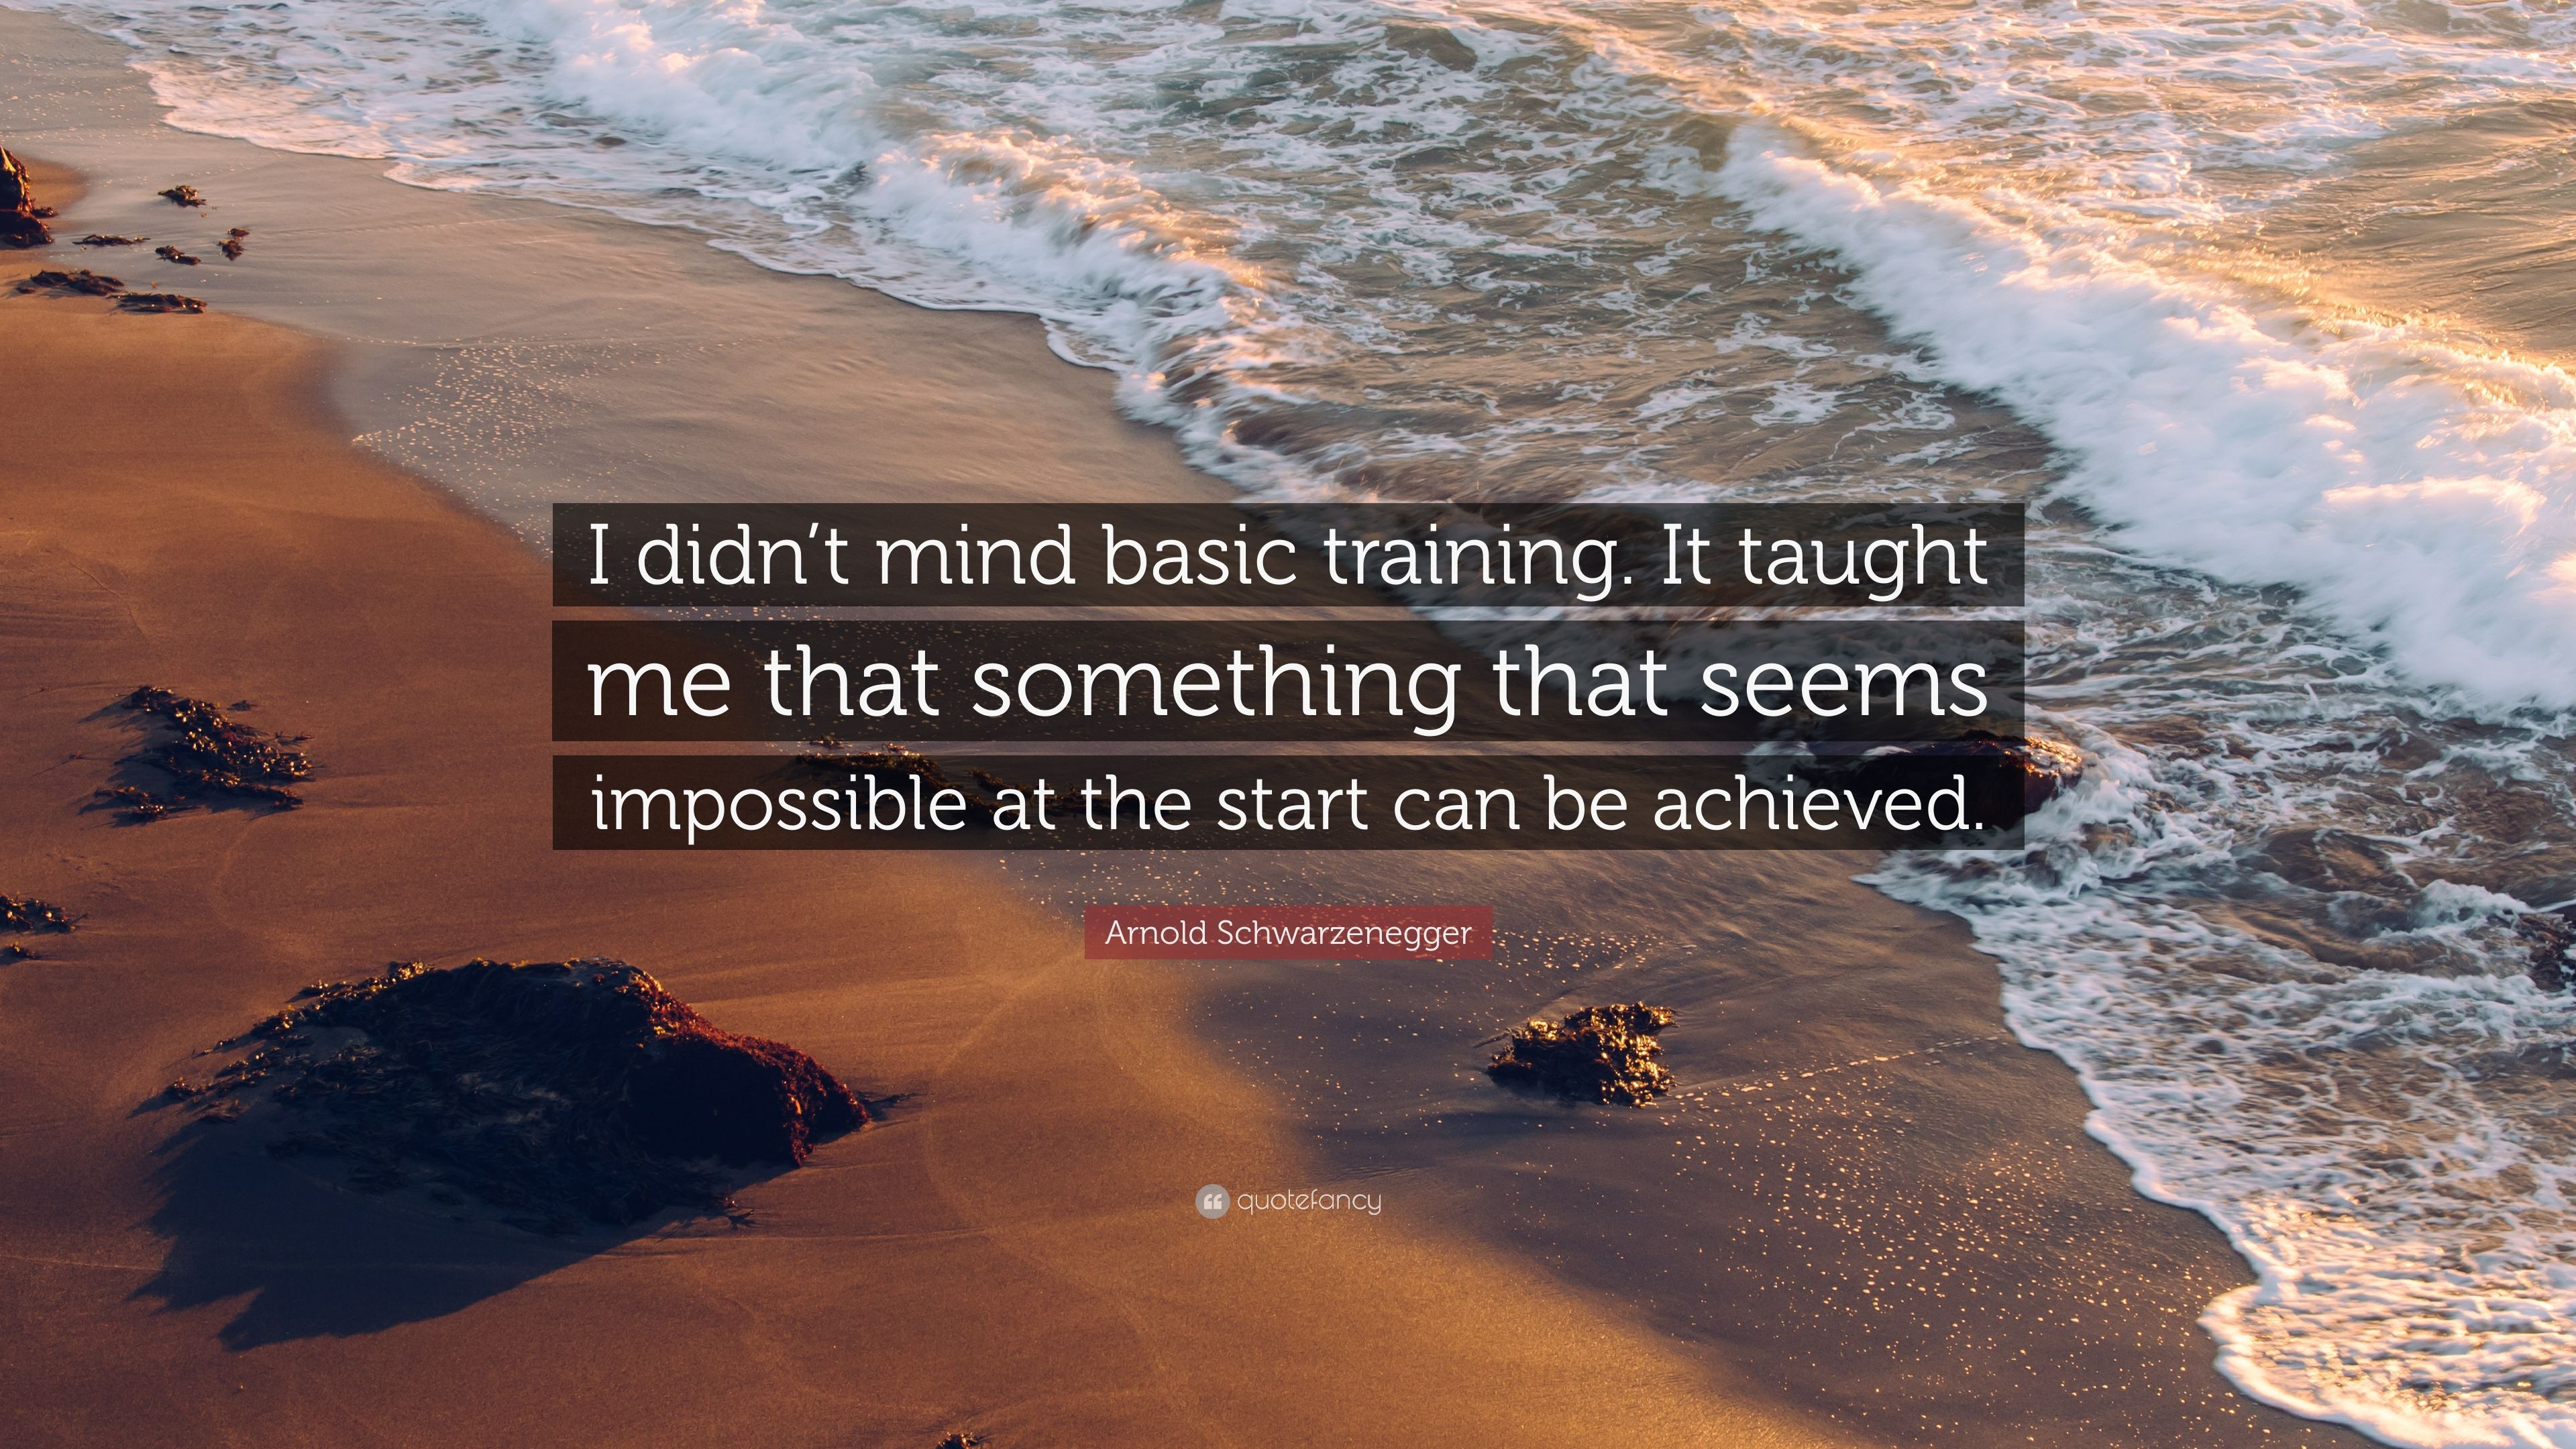 Arnold Schwarzenegger Quote: “I didn't mind basic training. It